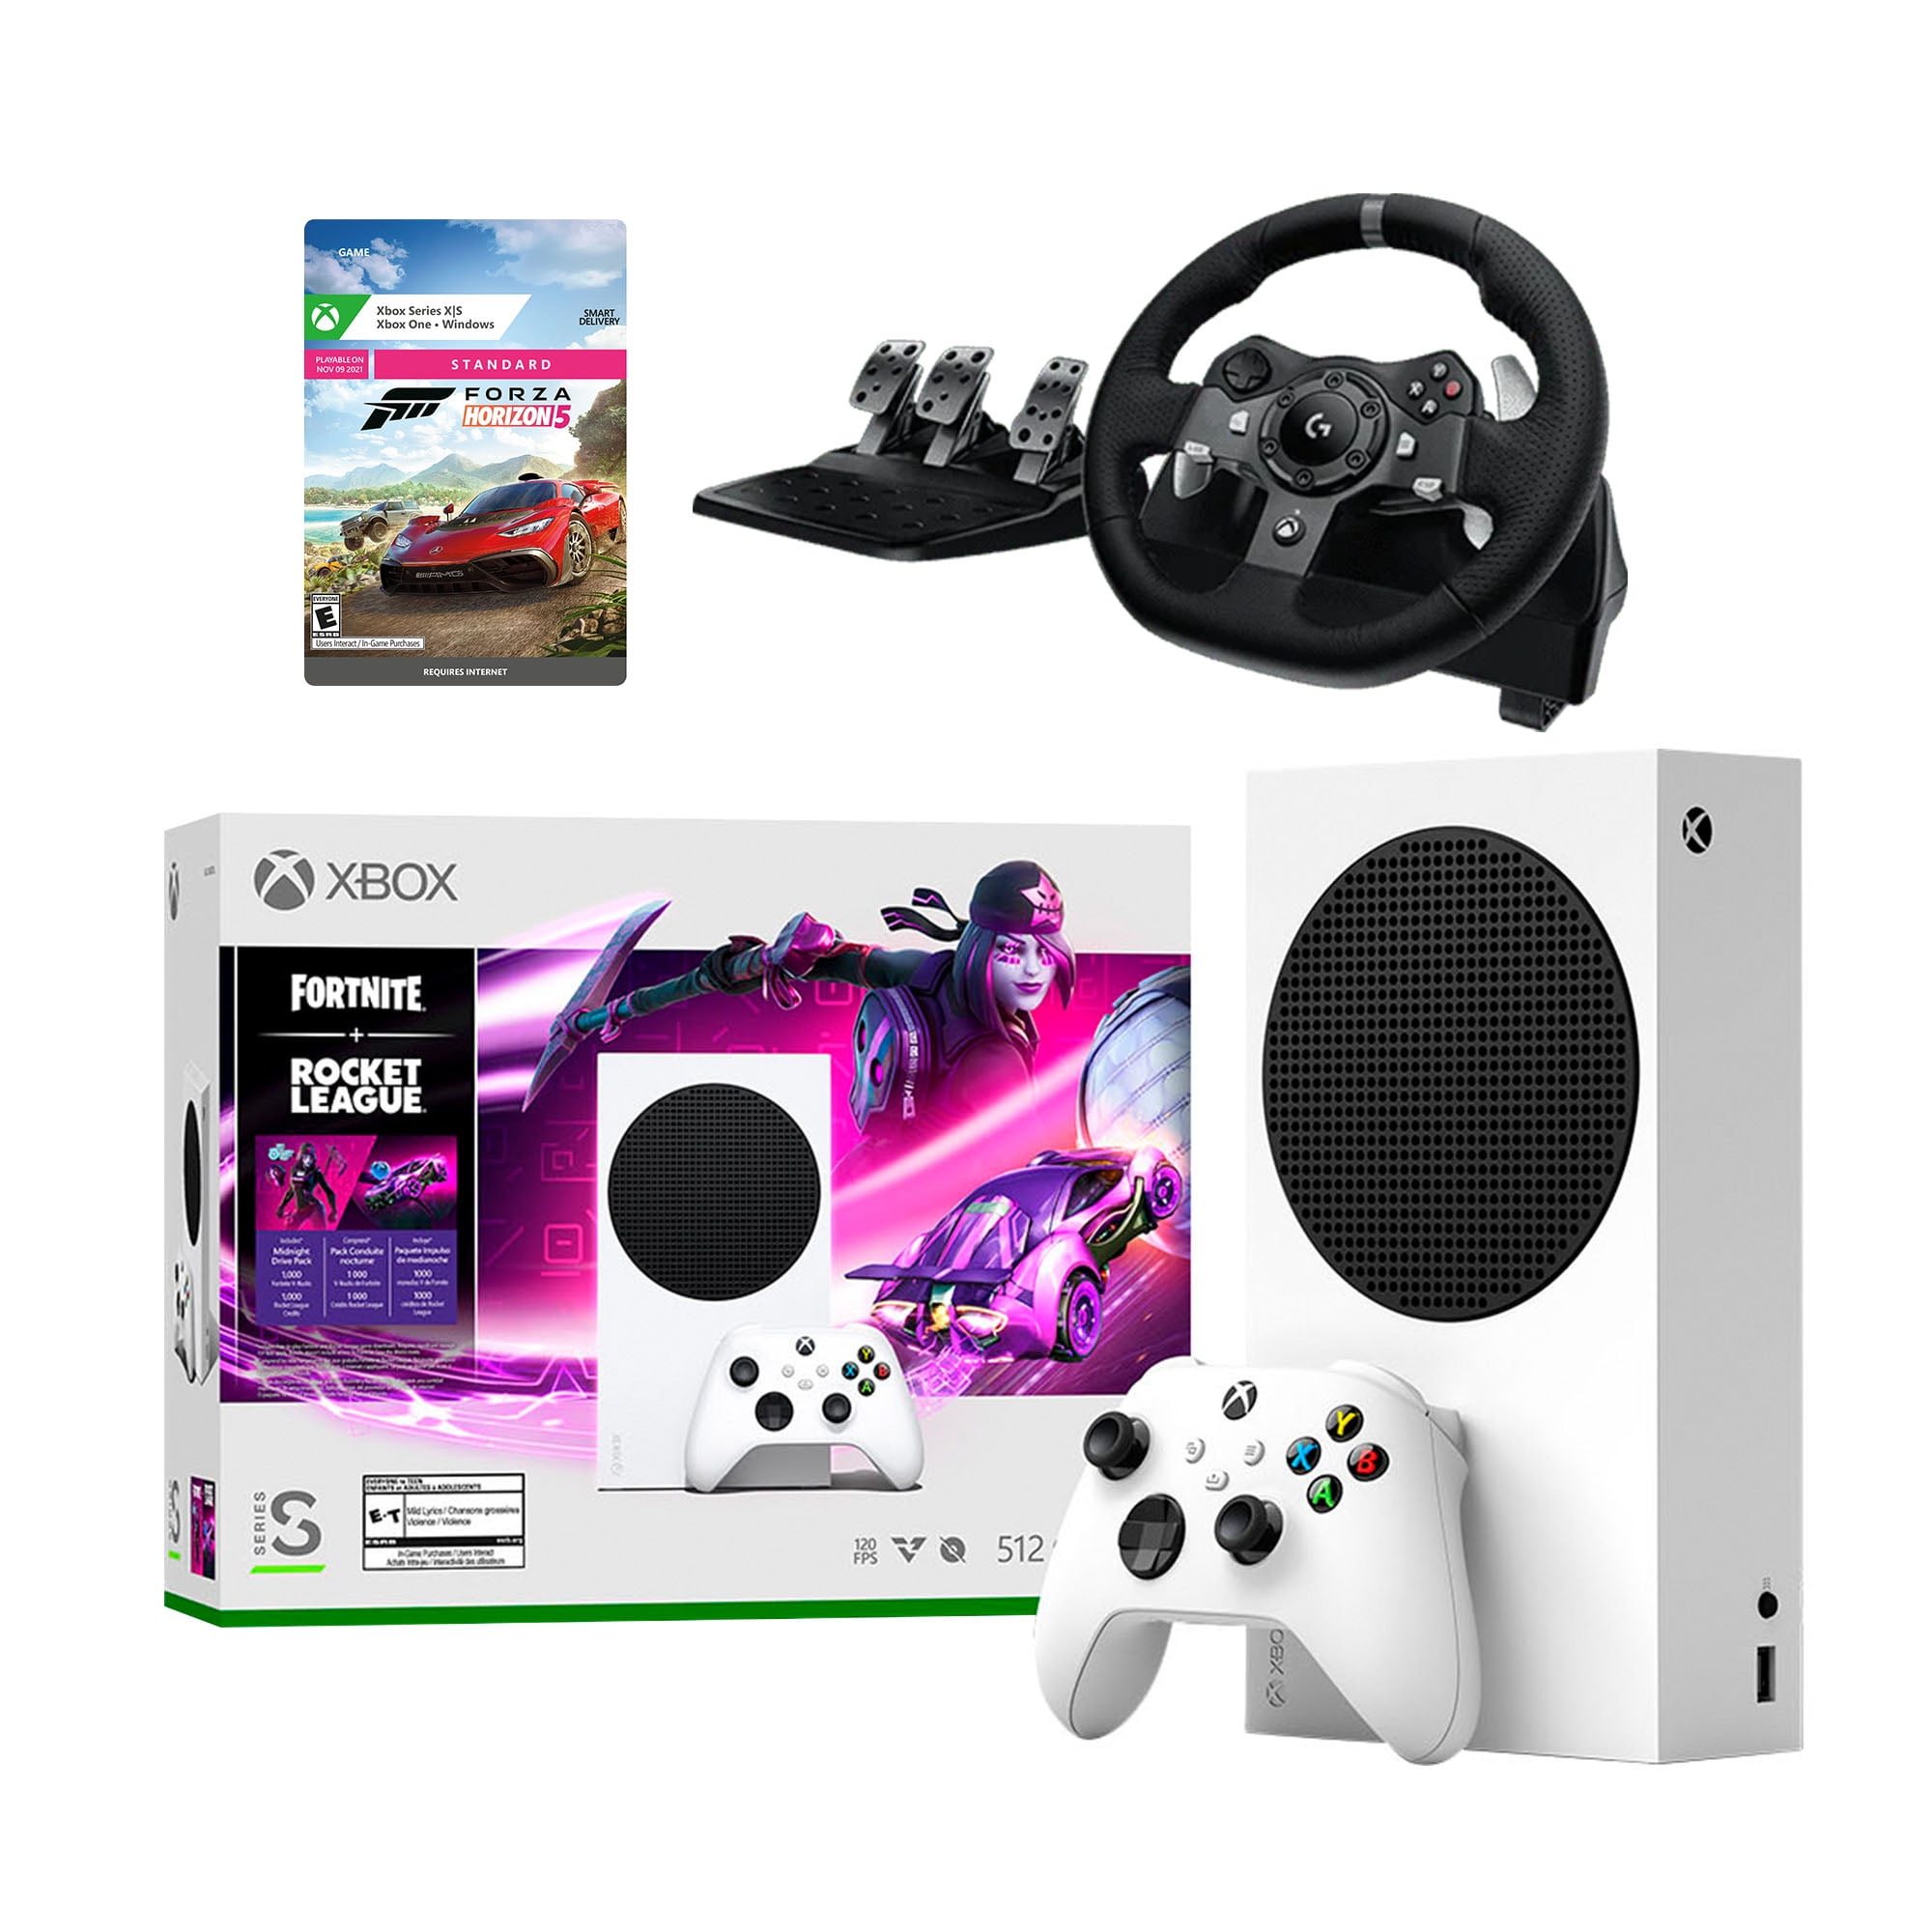 Microsoft Xbox One S 1TB All-Digital Edition Console (Disc-free 